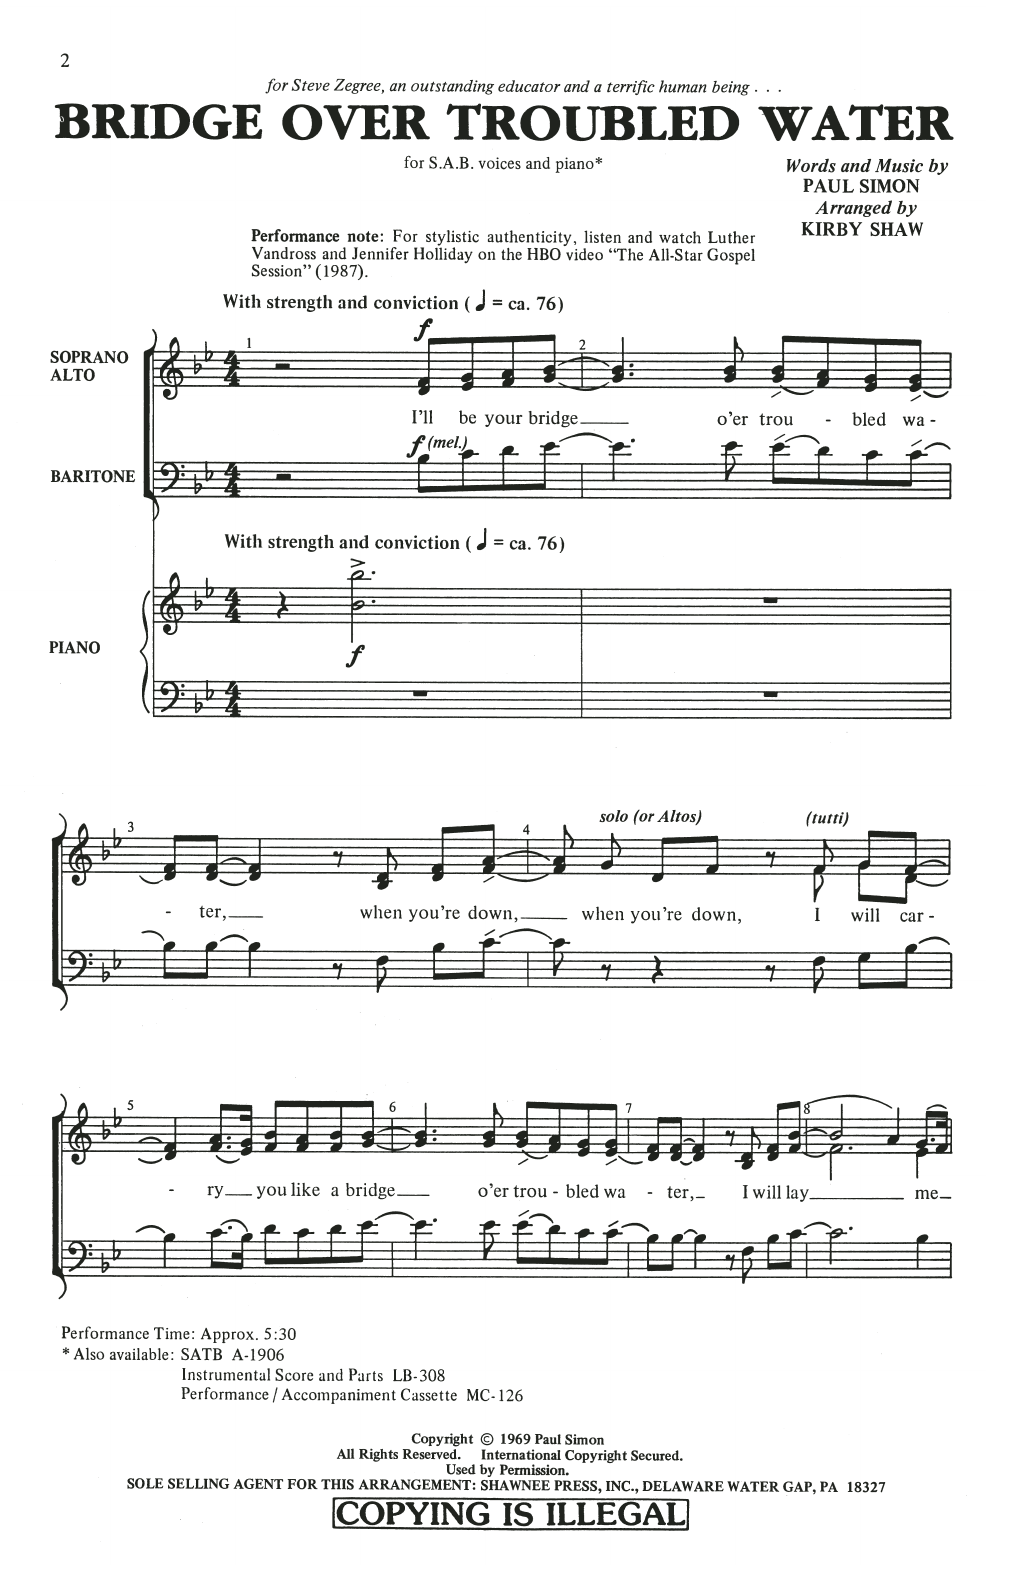 Simon & Garfunkel Bridge Over Troubled Water (arr. Kirby Shaw) Sheet Music Notes & Chords for SAB Choir - Download or Print PDF